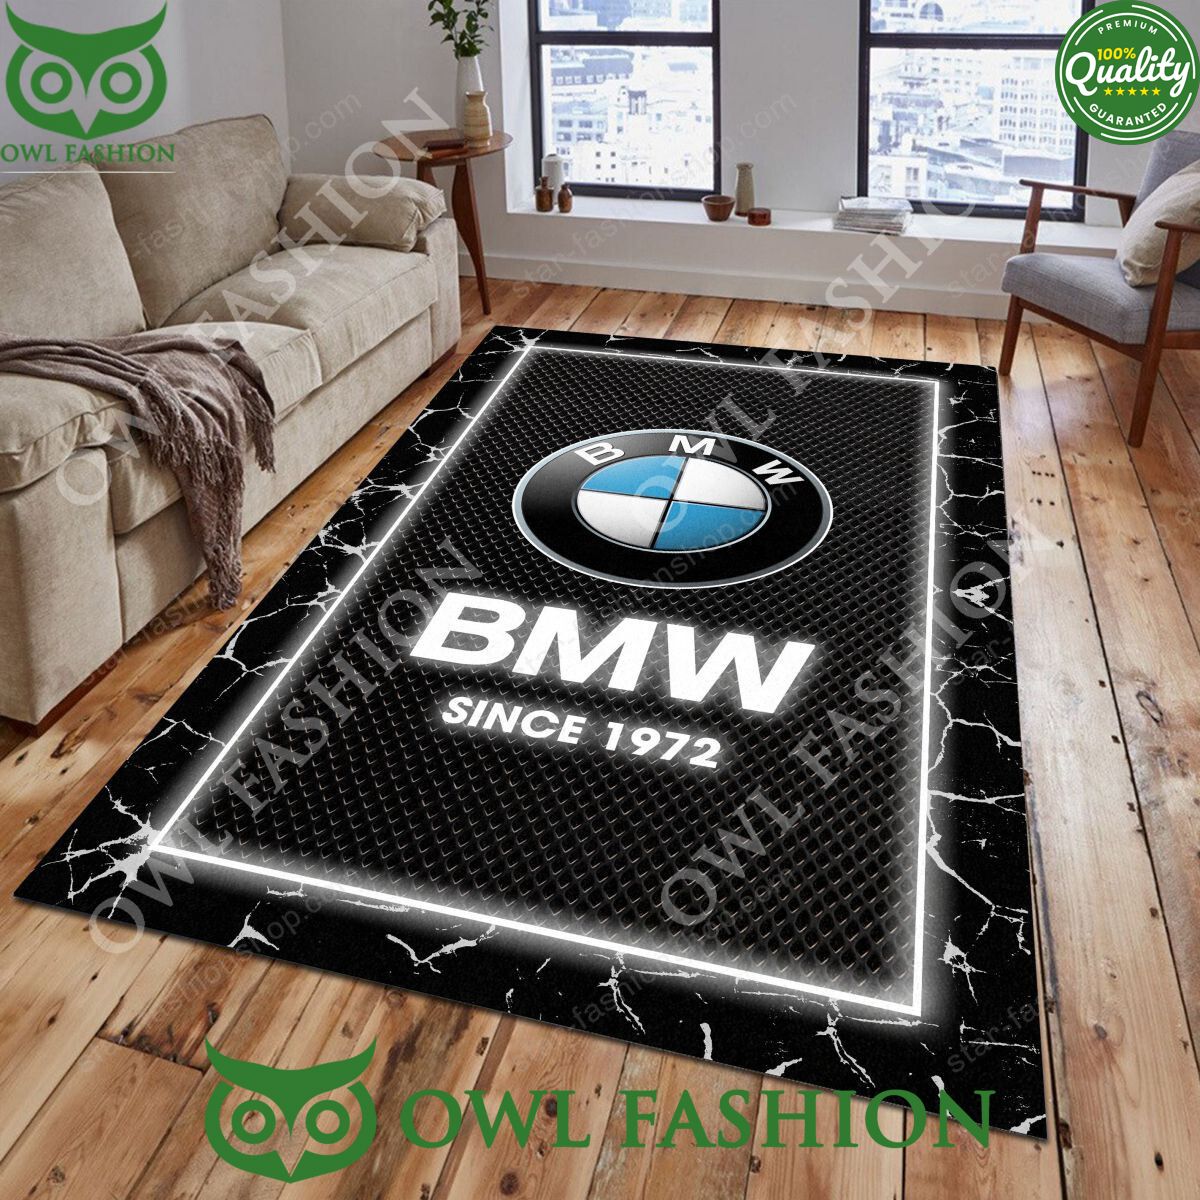 BMW Car Black Rug Carpet For Living Room Nice photo dude